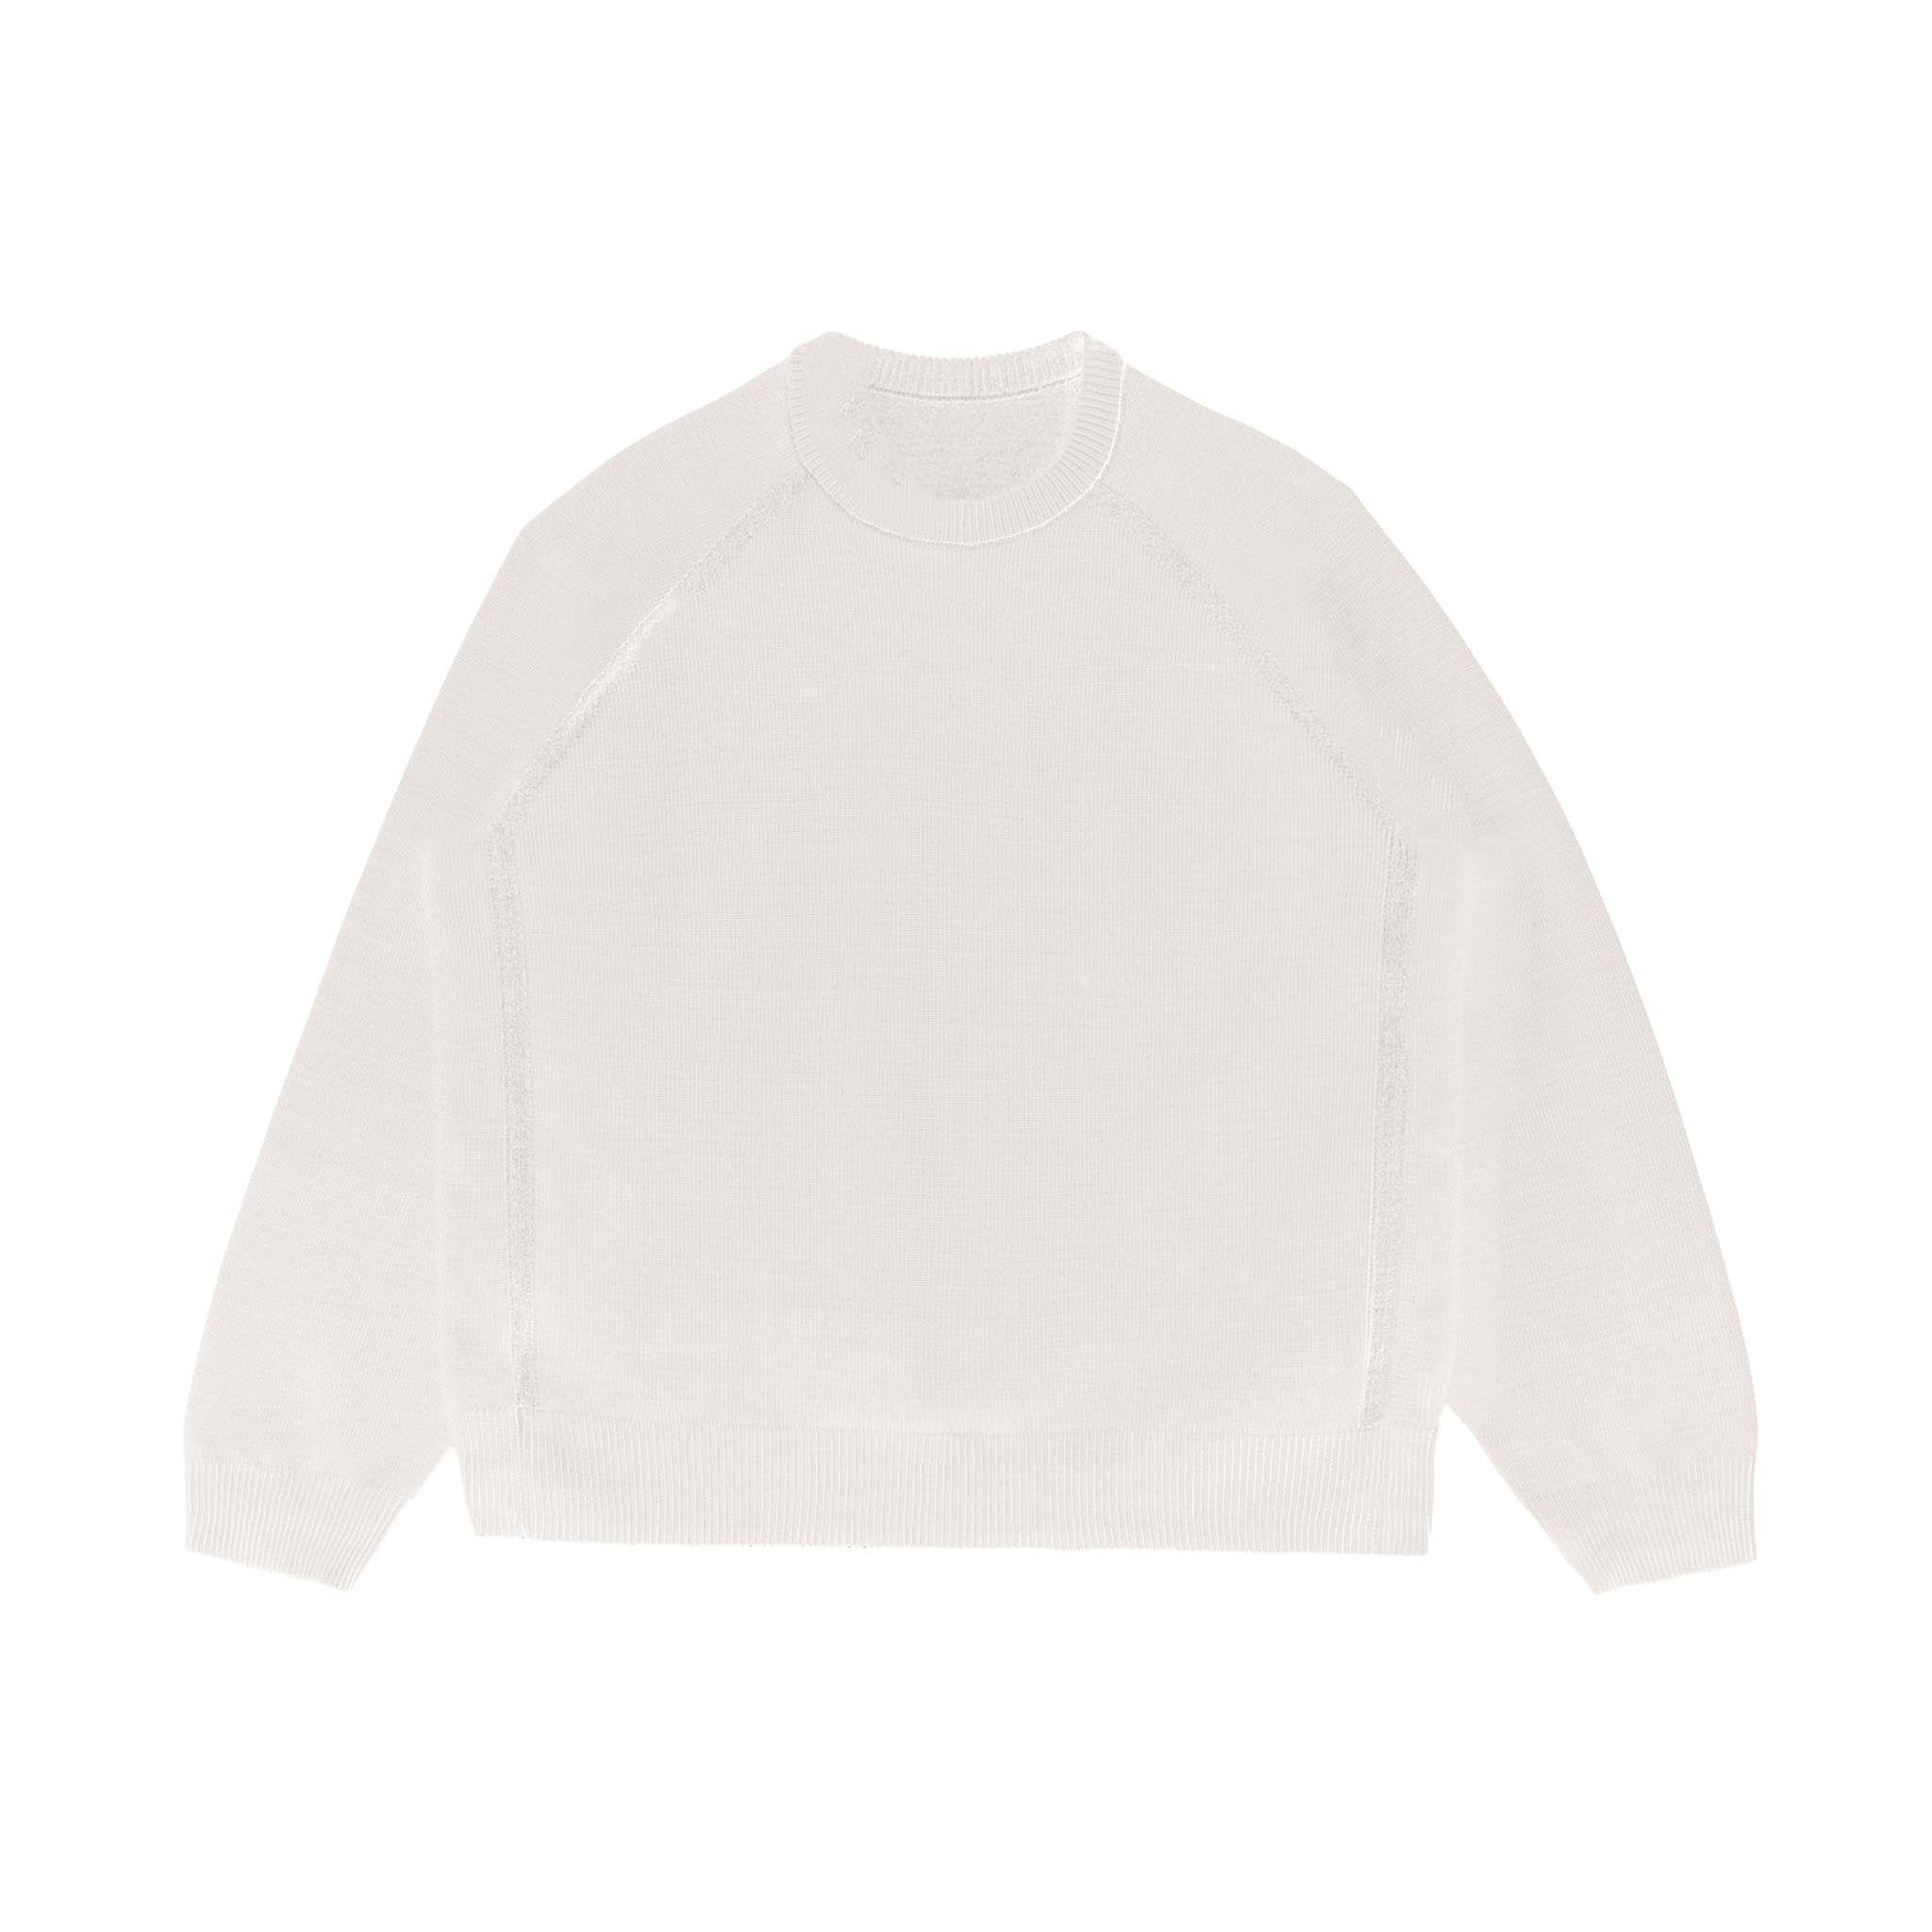 ADIDAS Y-3 Classic Crewneck Sweater White